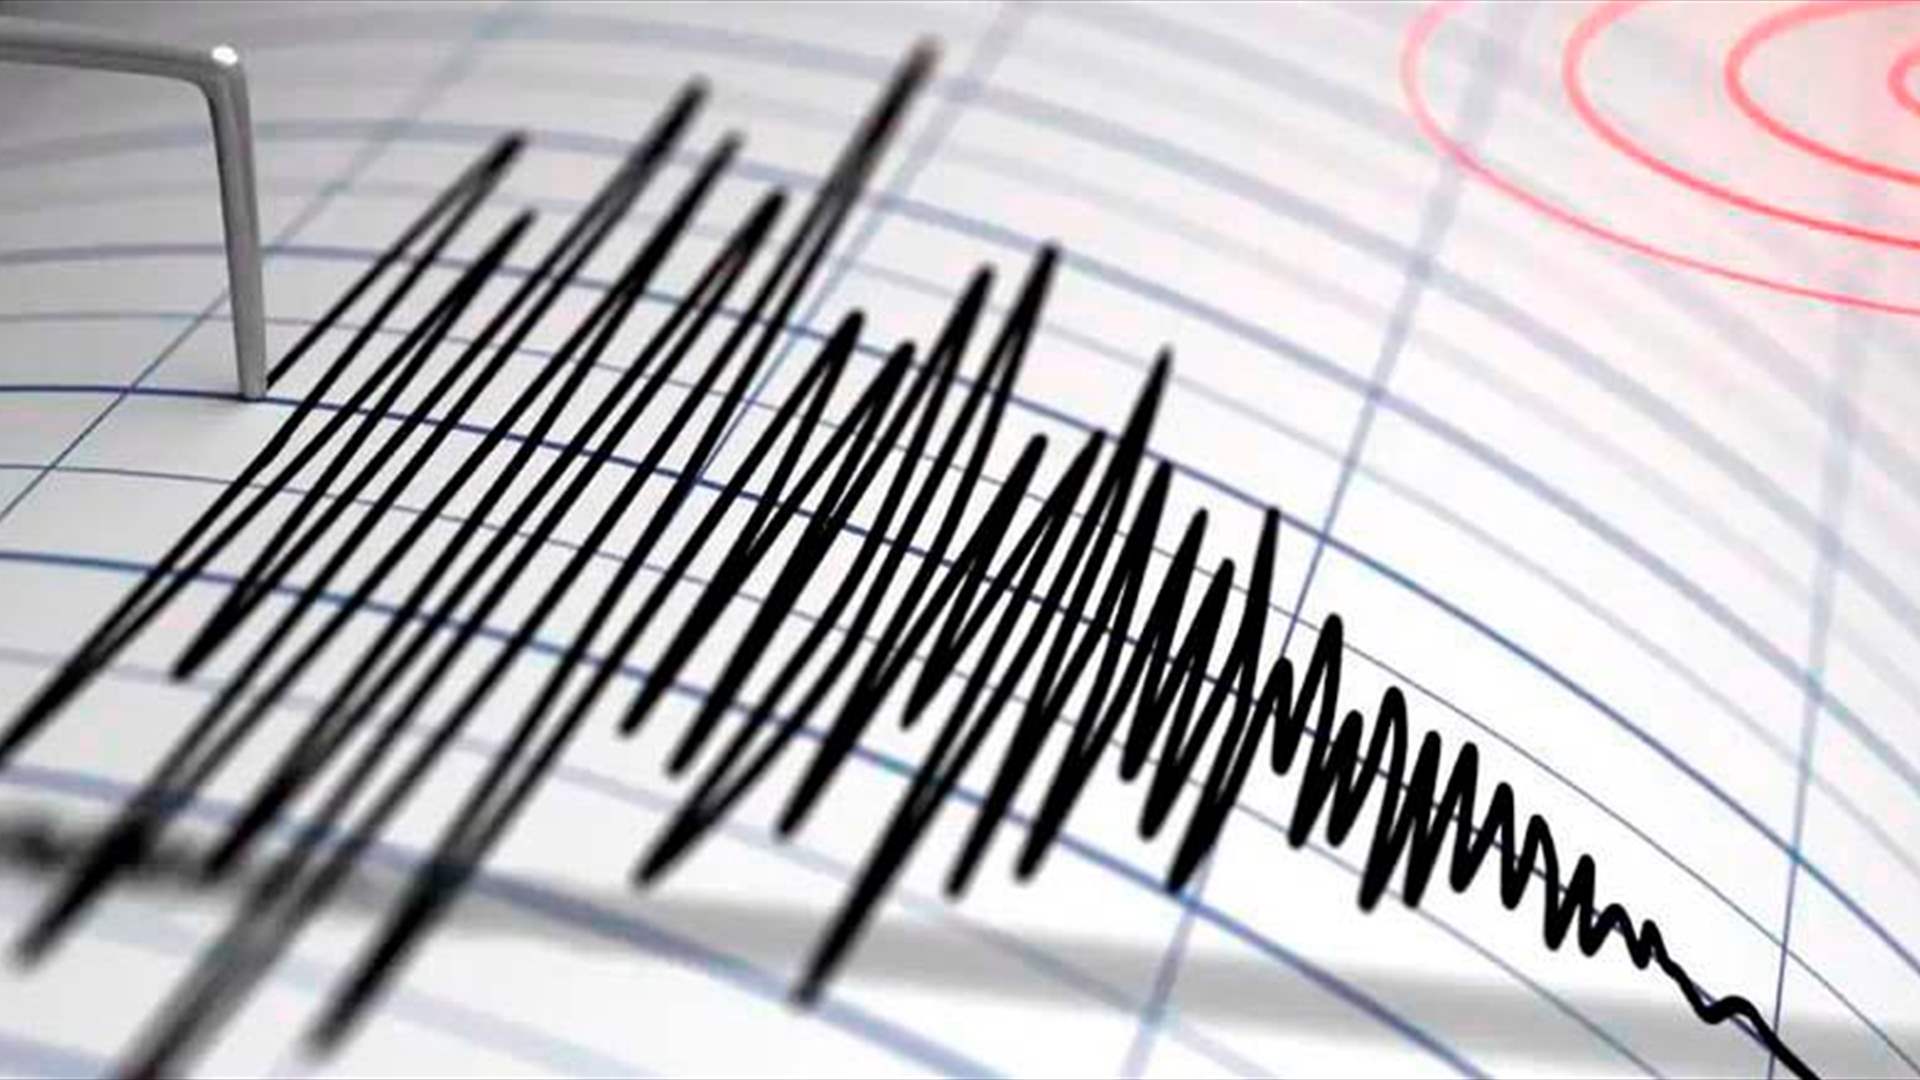 Magnitude 6.7 earthquake hits Philippines